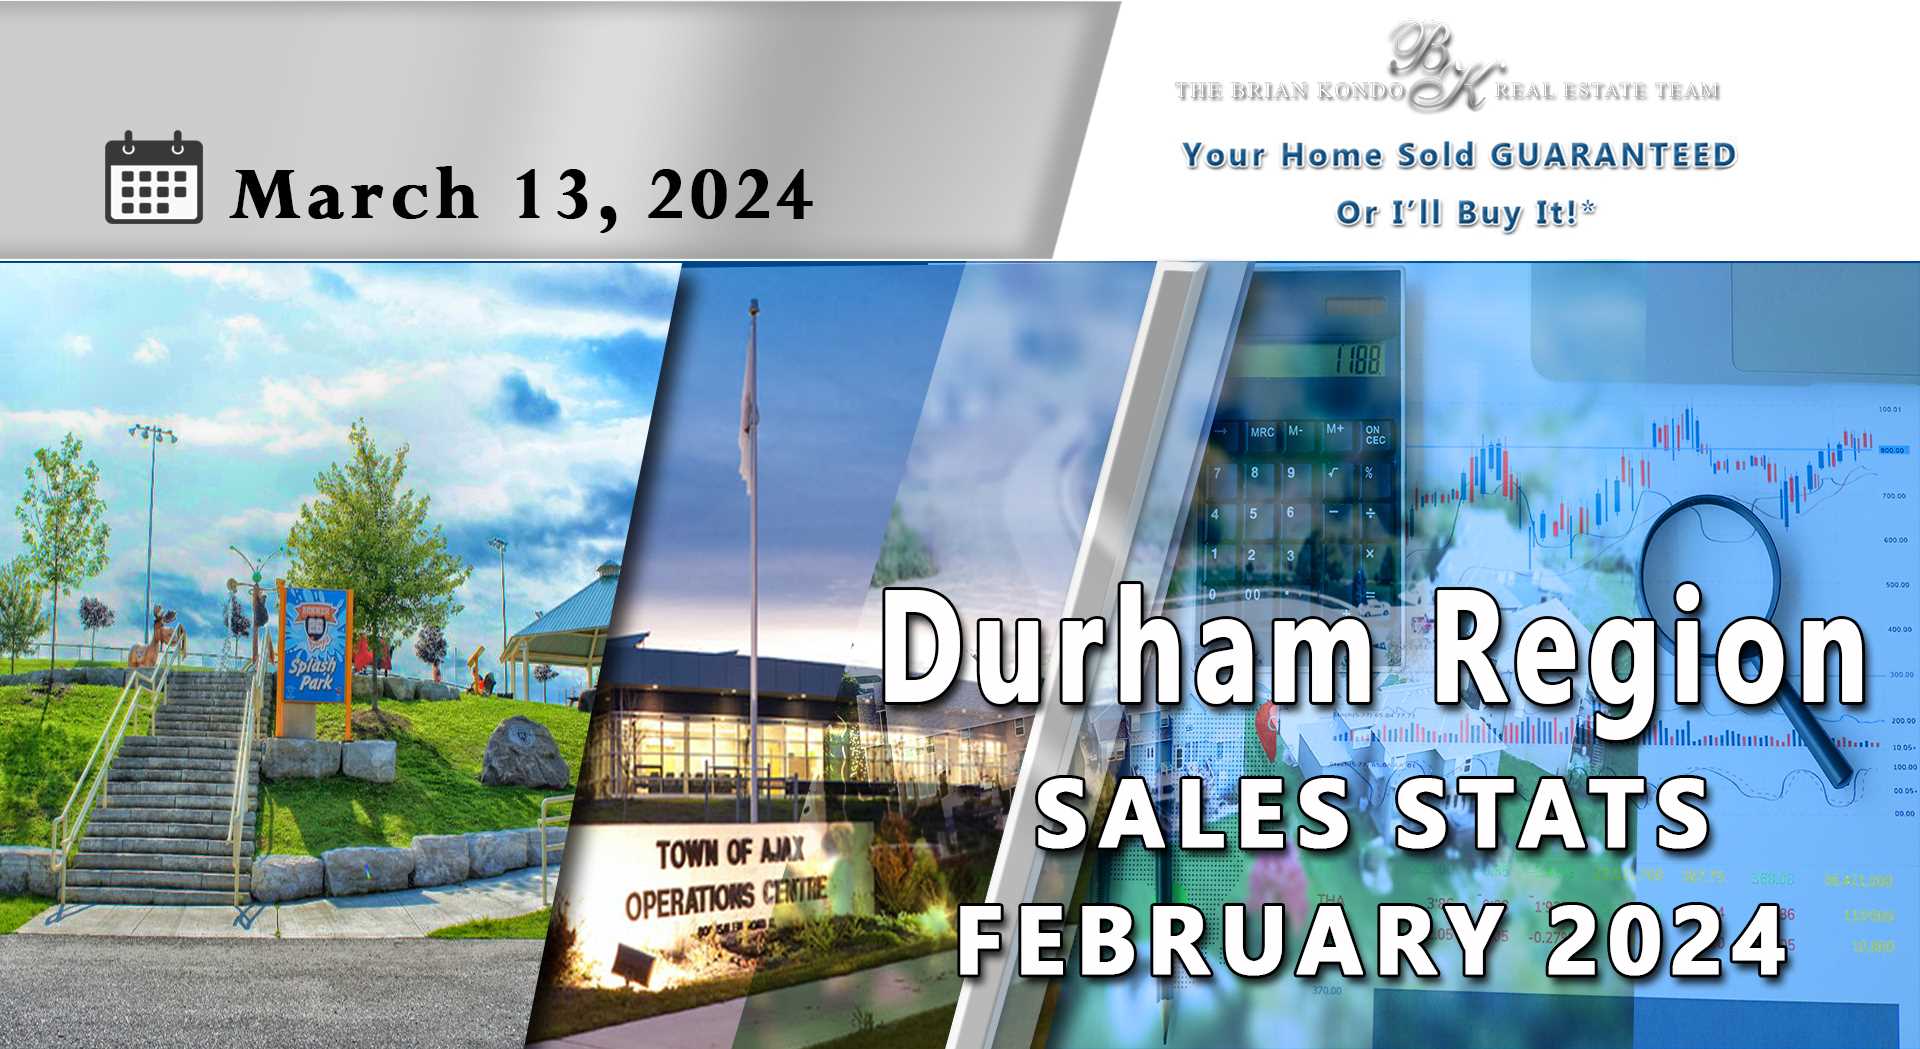 DURHAM REGION SALES STATS FEBRUARY 2024